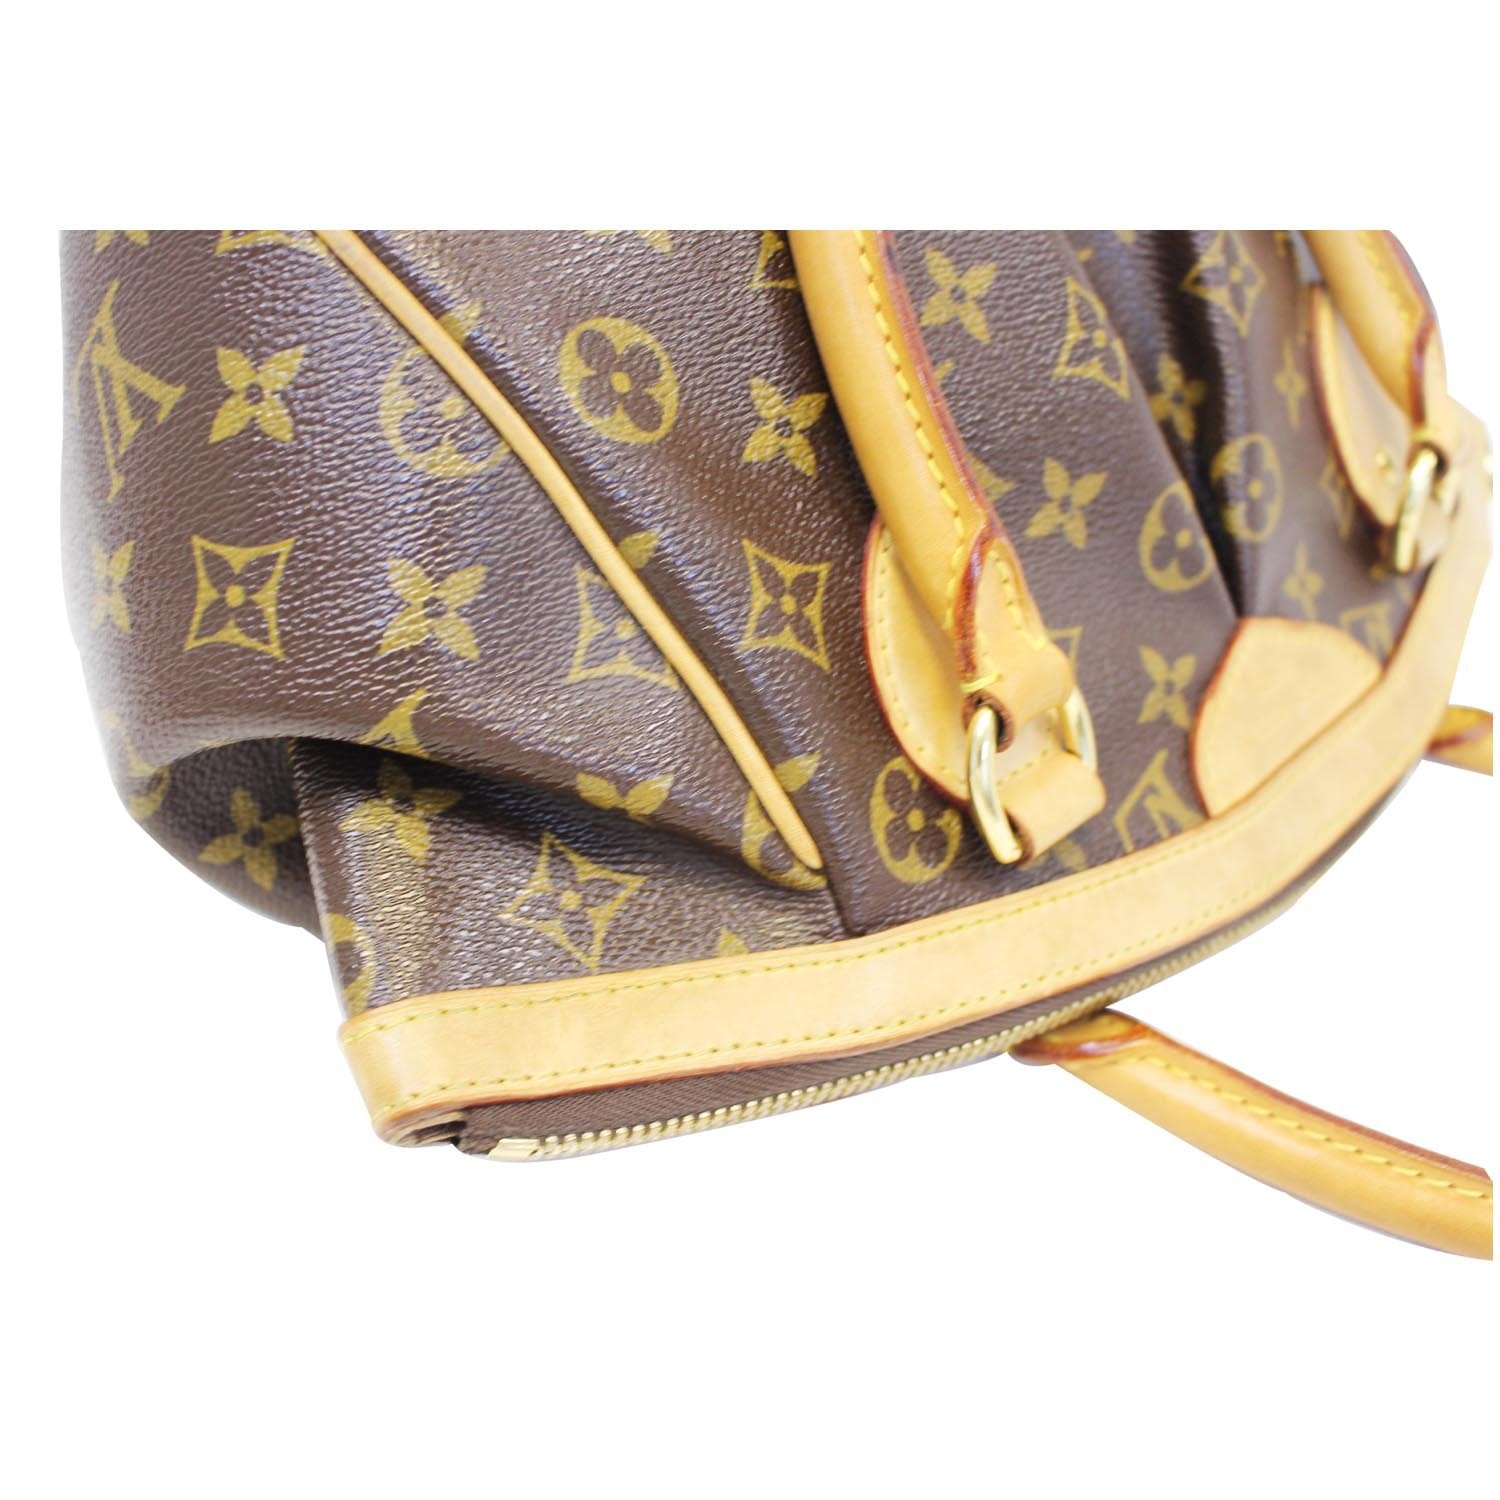 Tivoli leather handbag Louis Vuitton Brown in Leather - 23979911